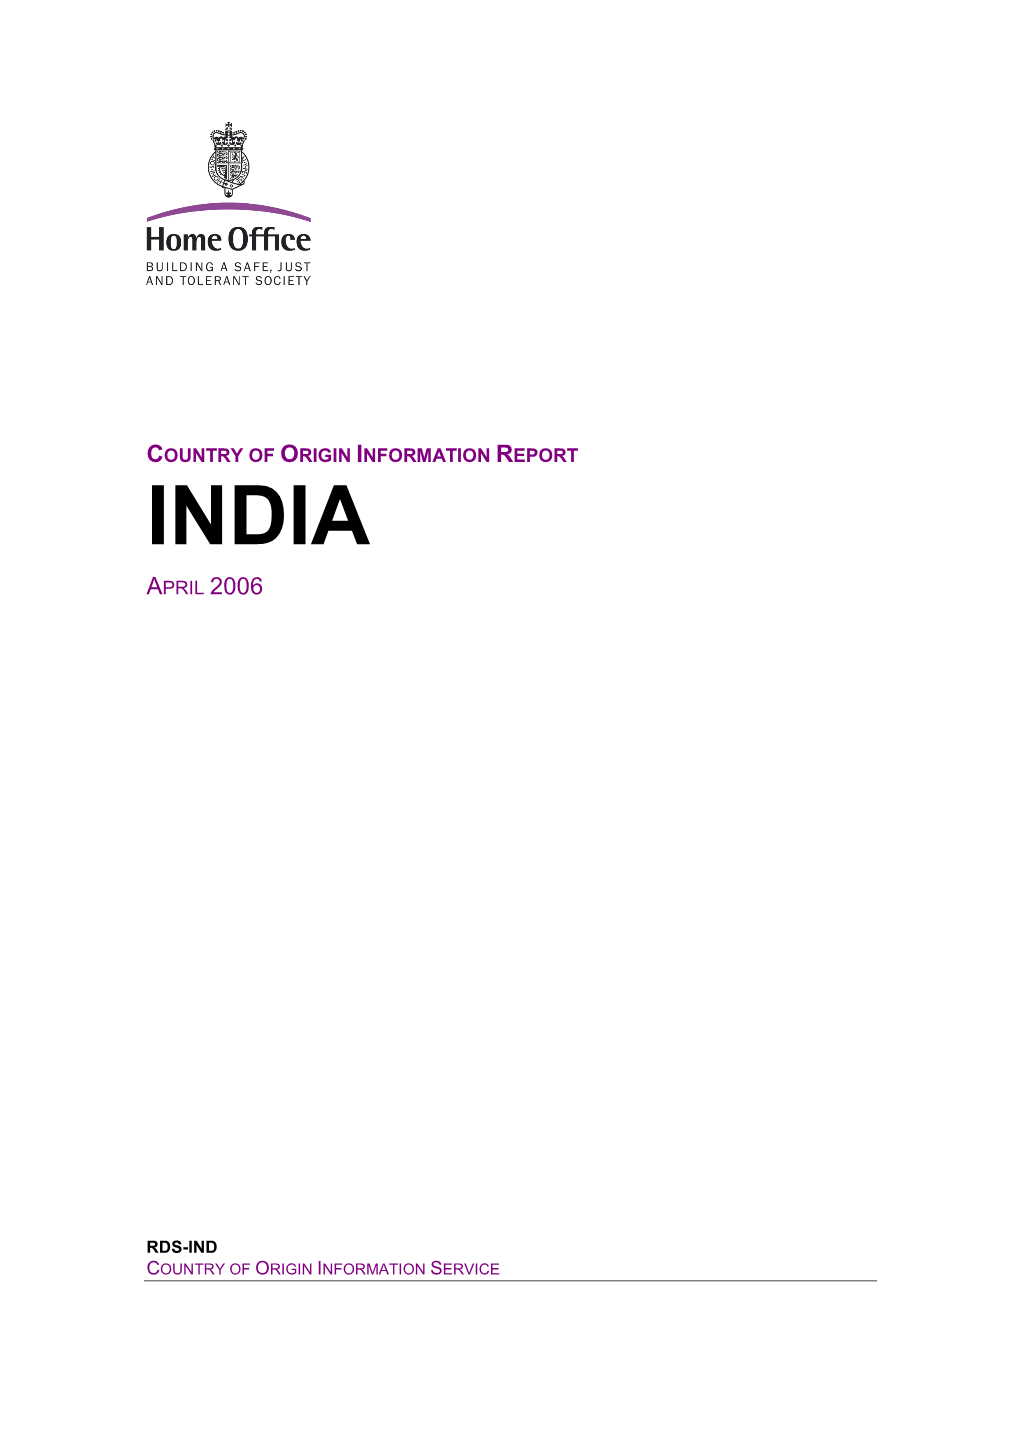 Country of Origin Information Report April 2006